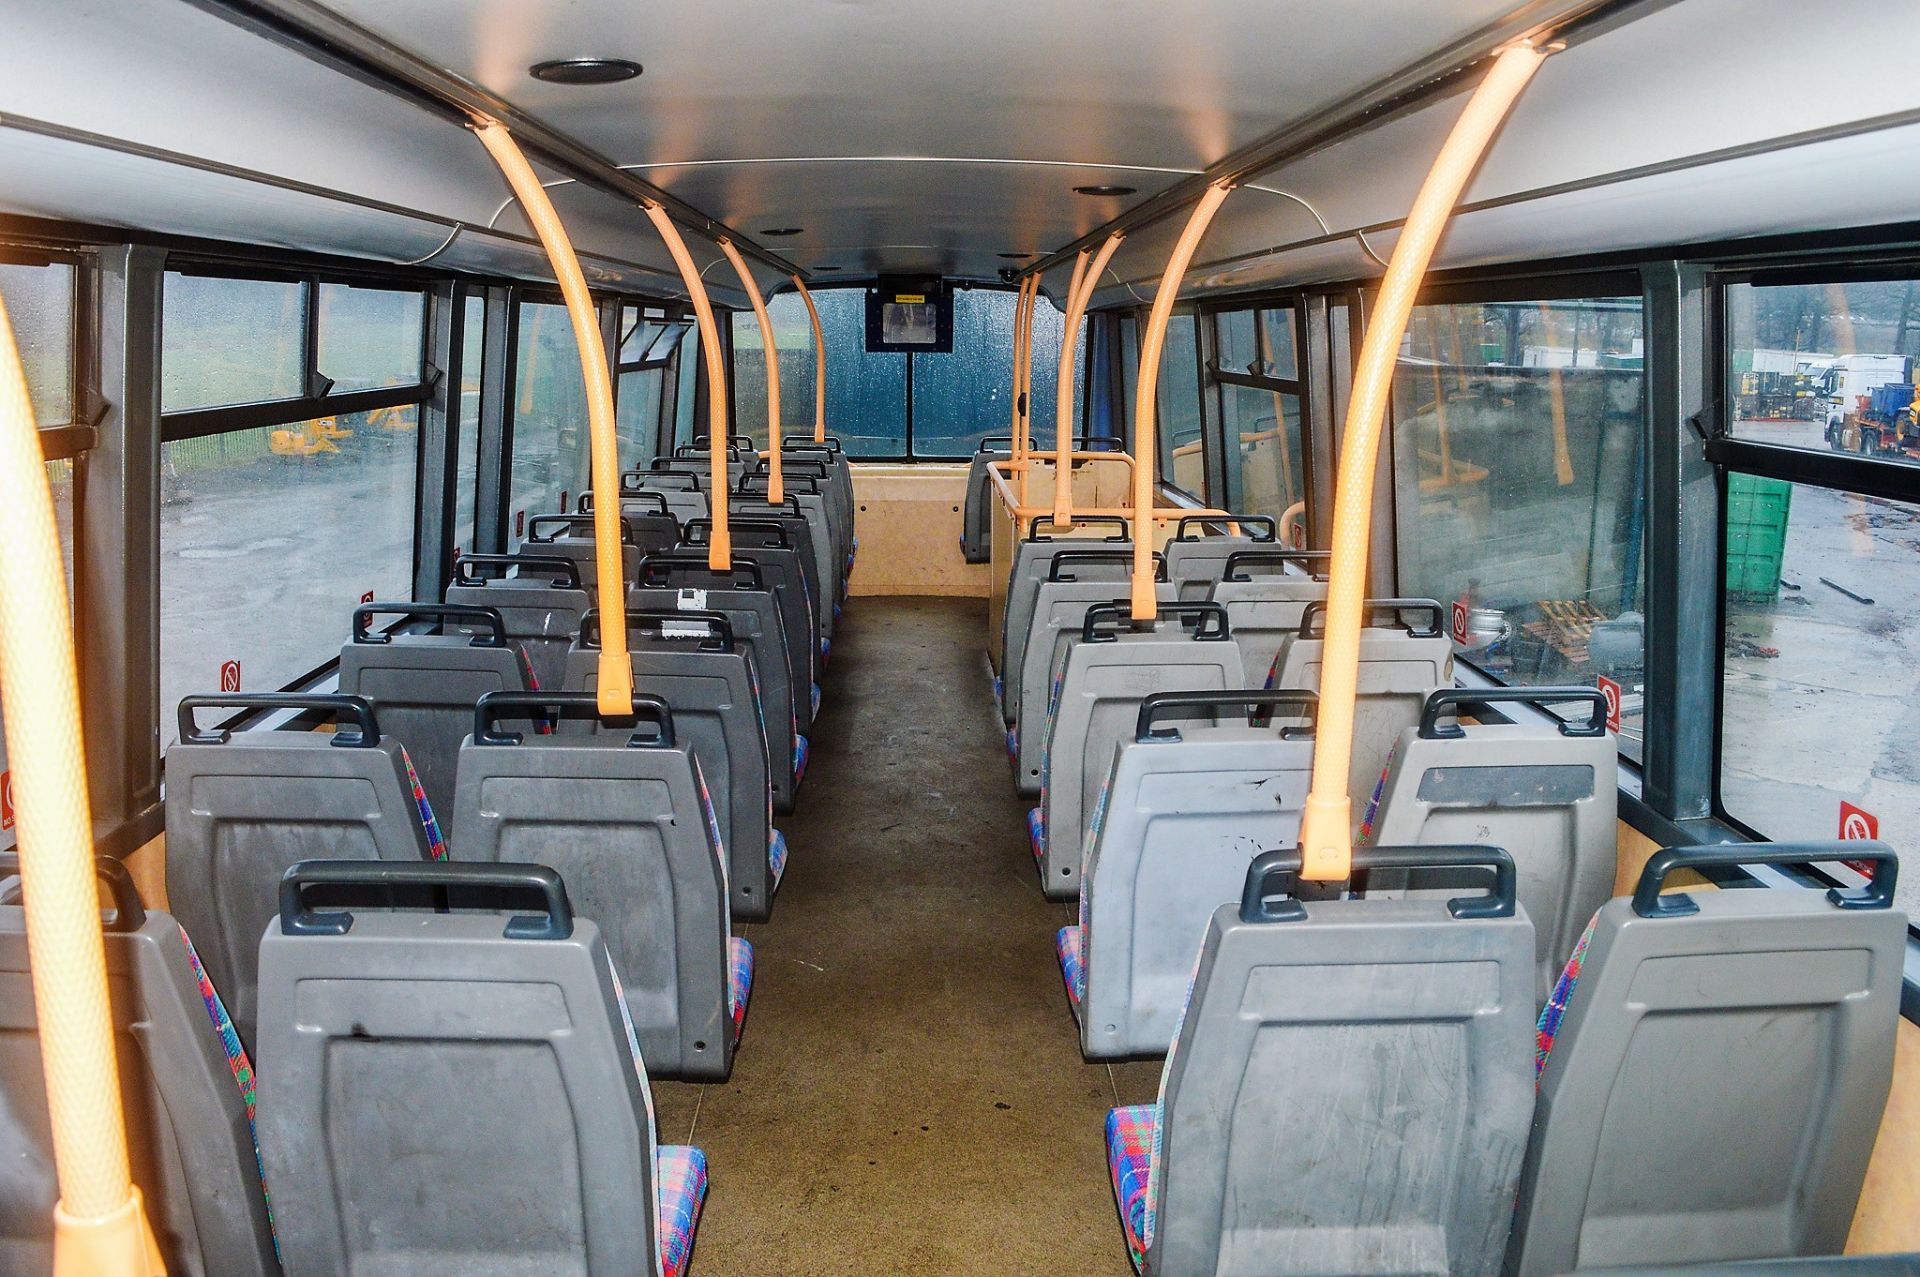 Alexander Dennis Trident Plaxton President 75 seat double deck service bus Registration Number: V532 - Image 10 of 12